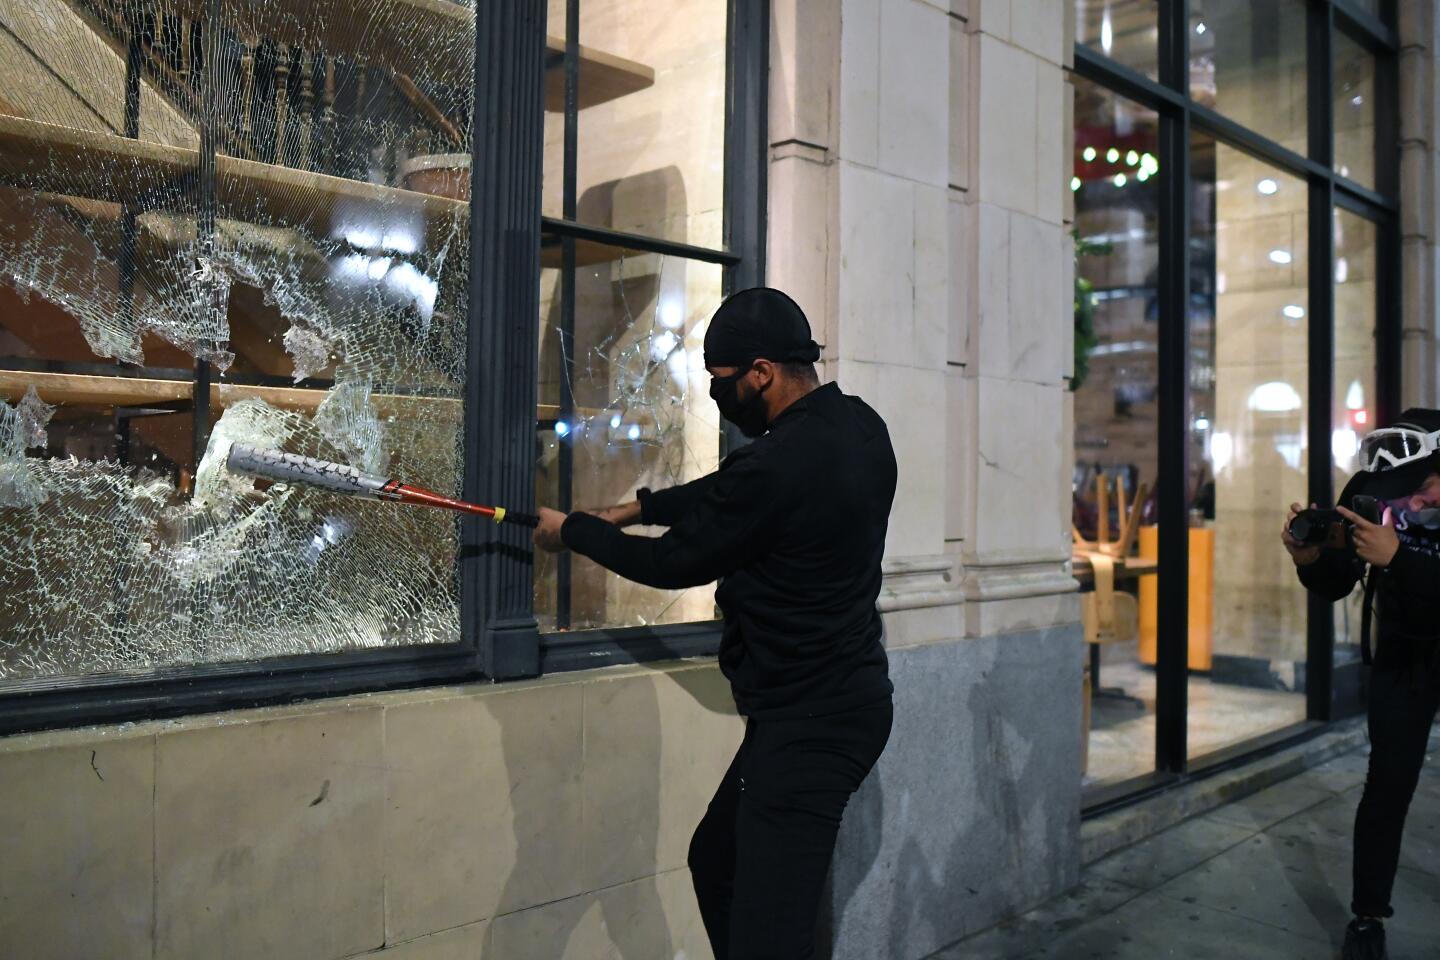 A man breaks a window with a bat in downtown Los Angeles